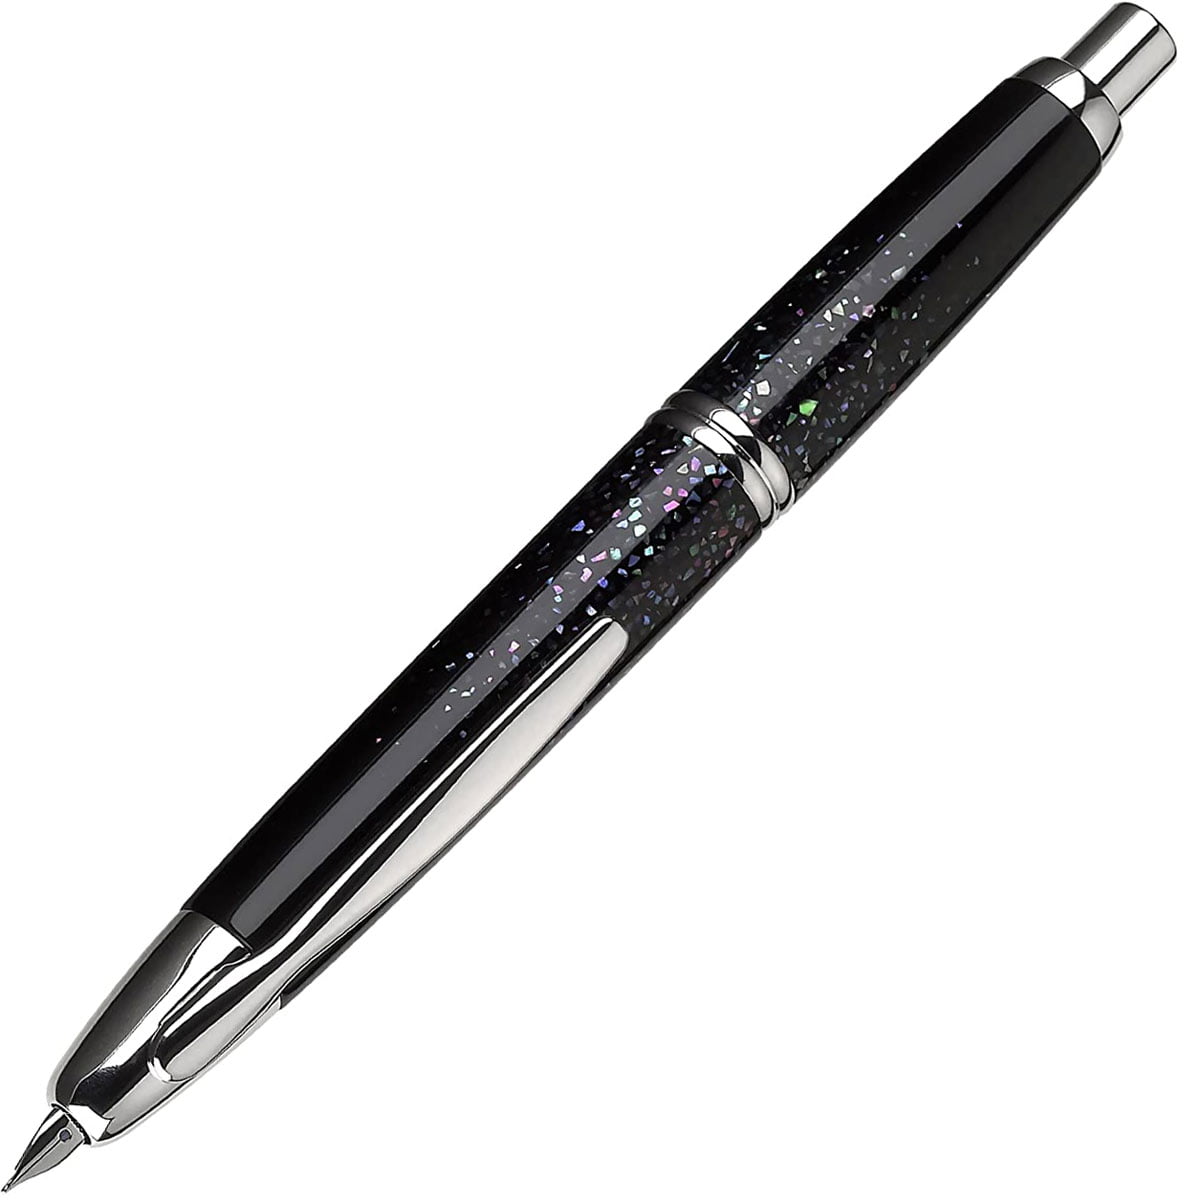 Pilot V Pen (varsity) Disposable Fountain Pens, Black Ink, Small Point Value Set of 5with Our Shop Original Product Description